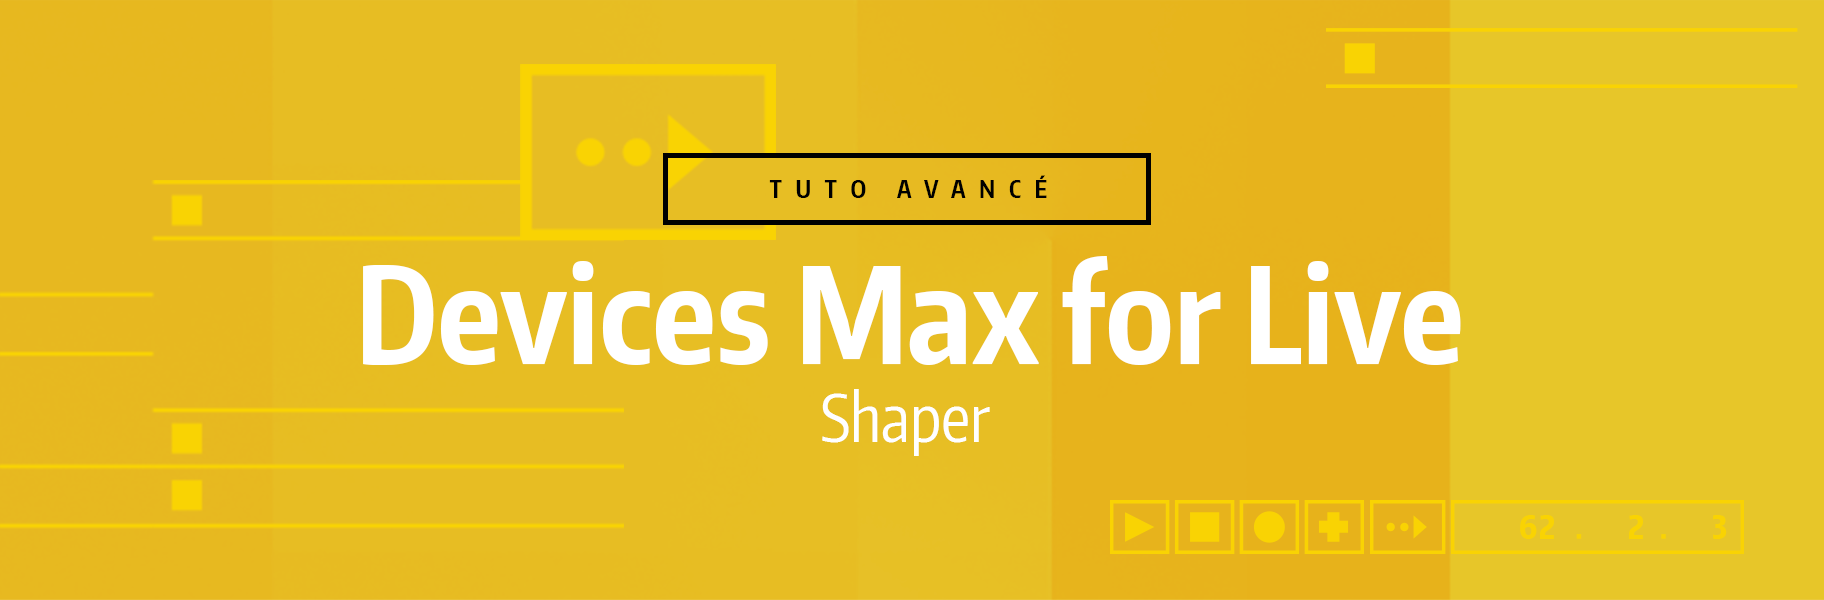 Tutoriel Ableton Live - Devices Max for Live - Shaper